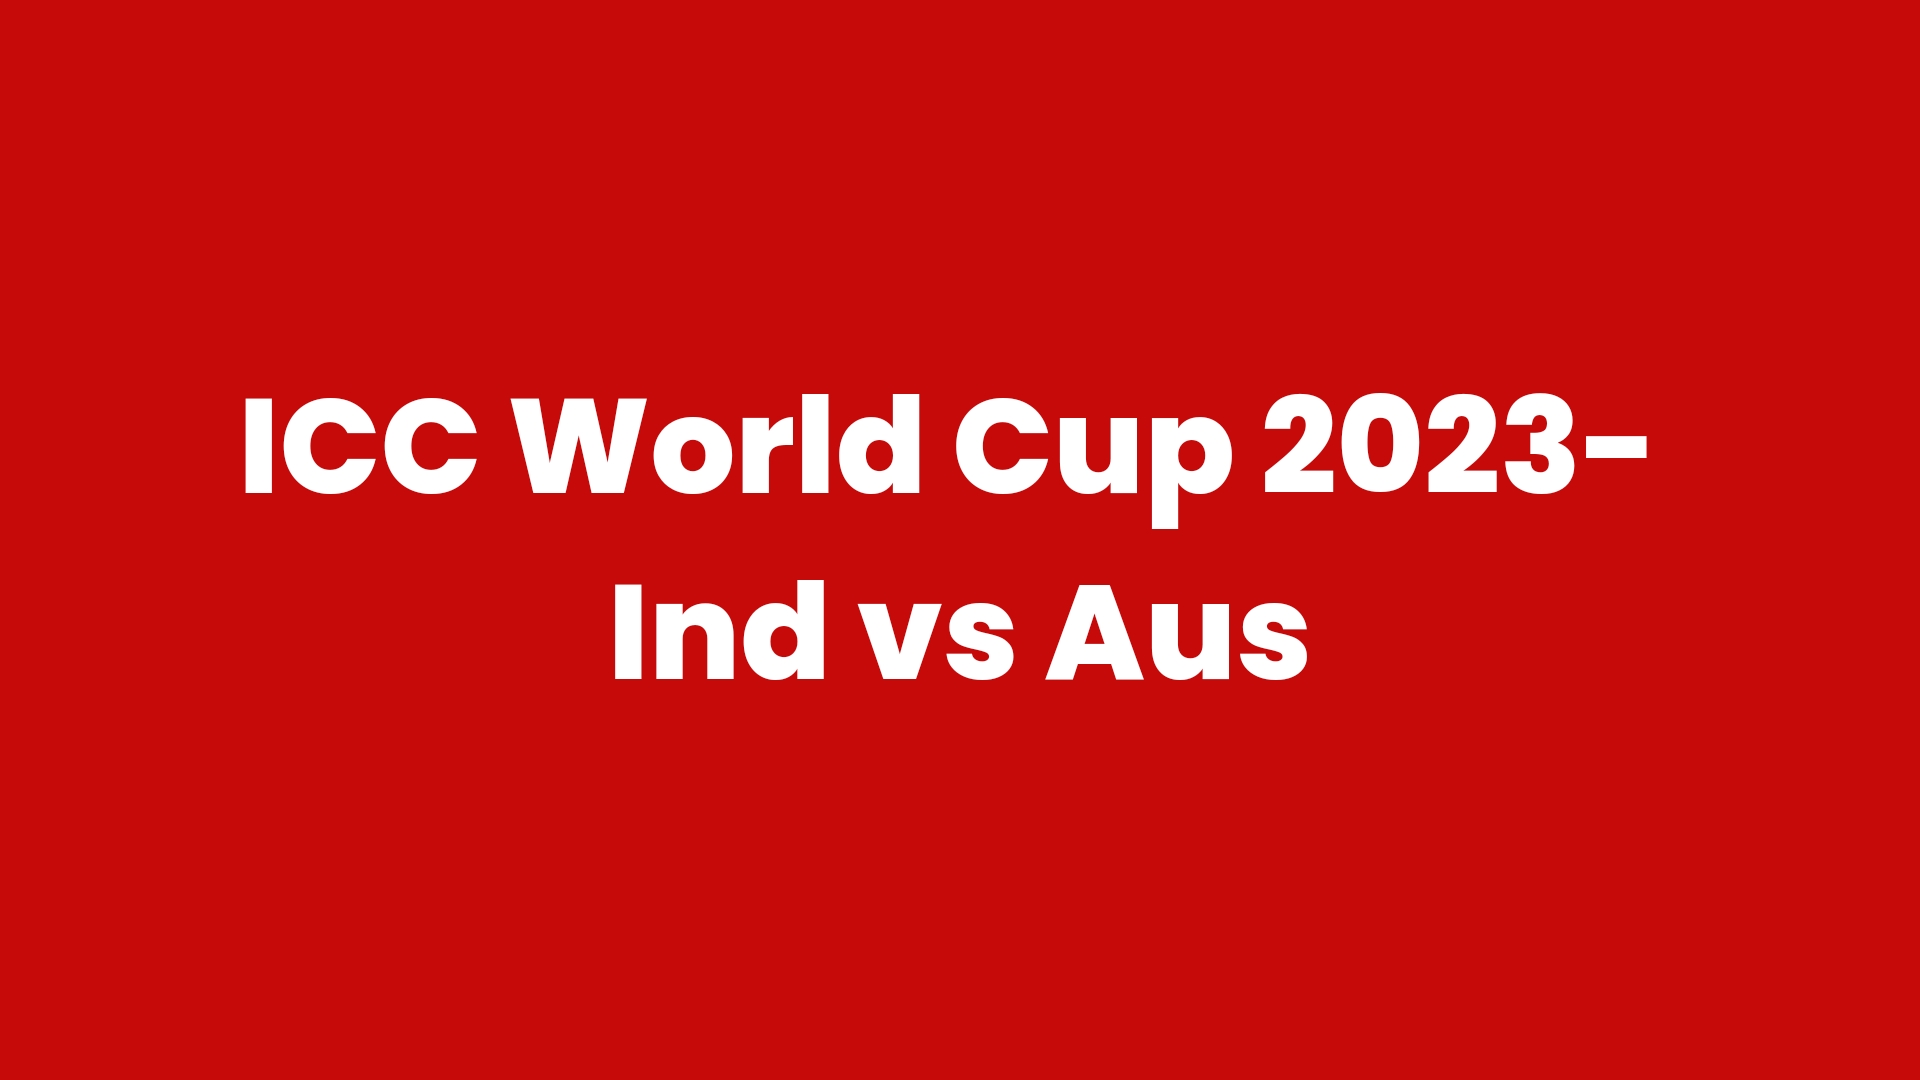 World Cup Final - IND vs AUS